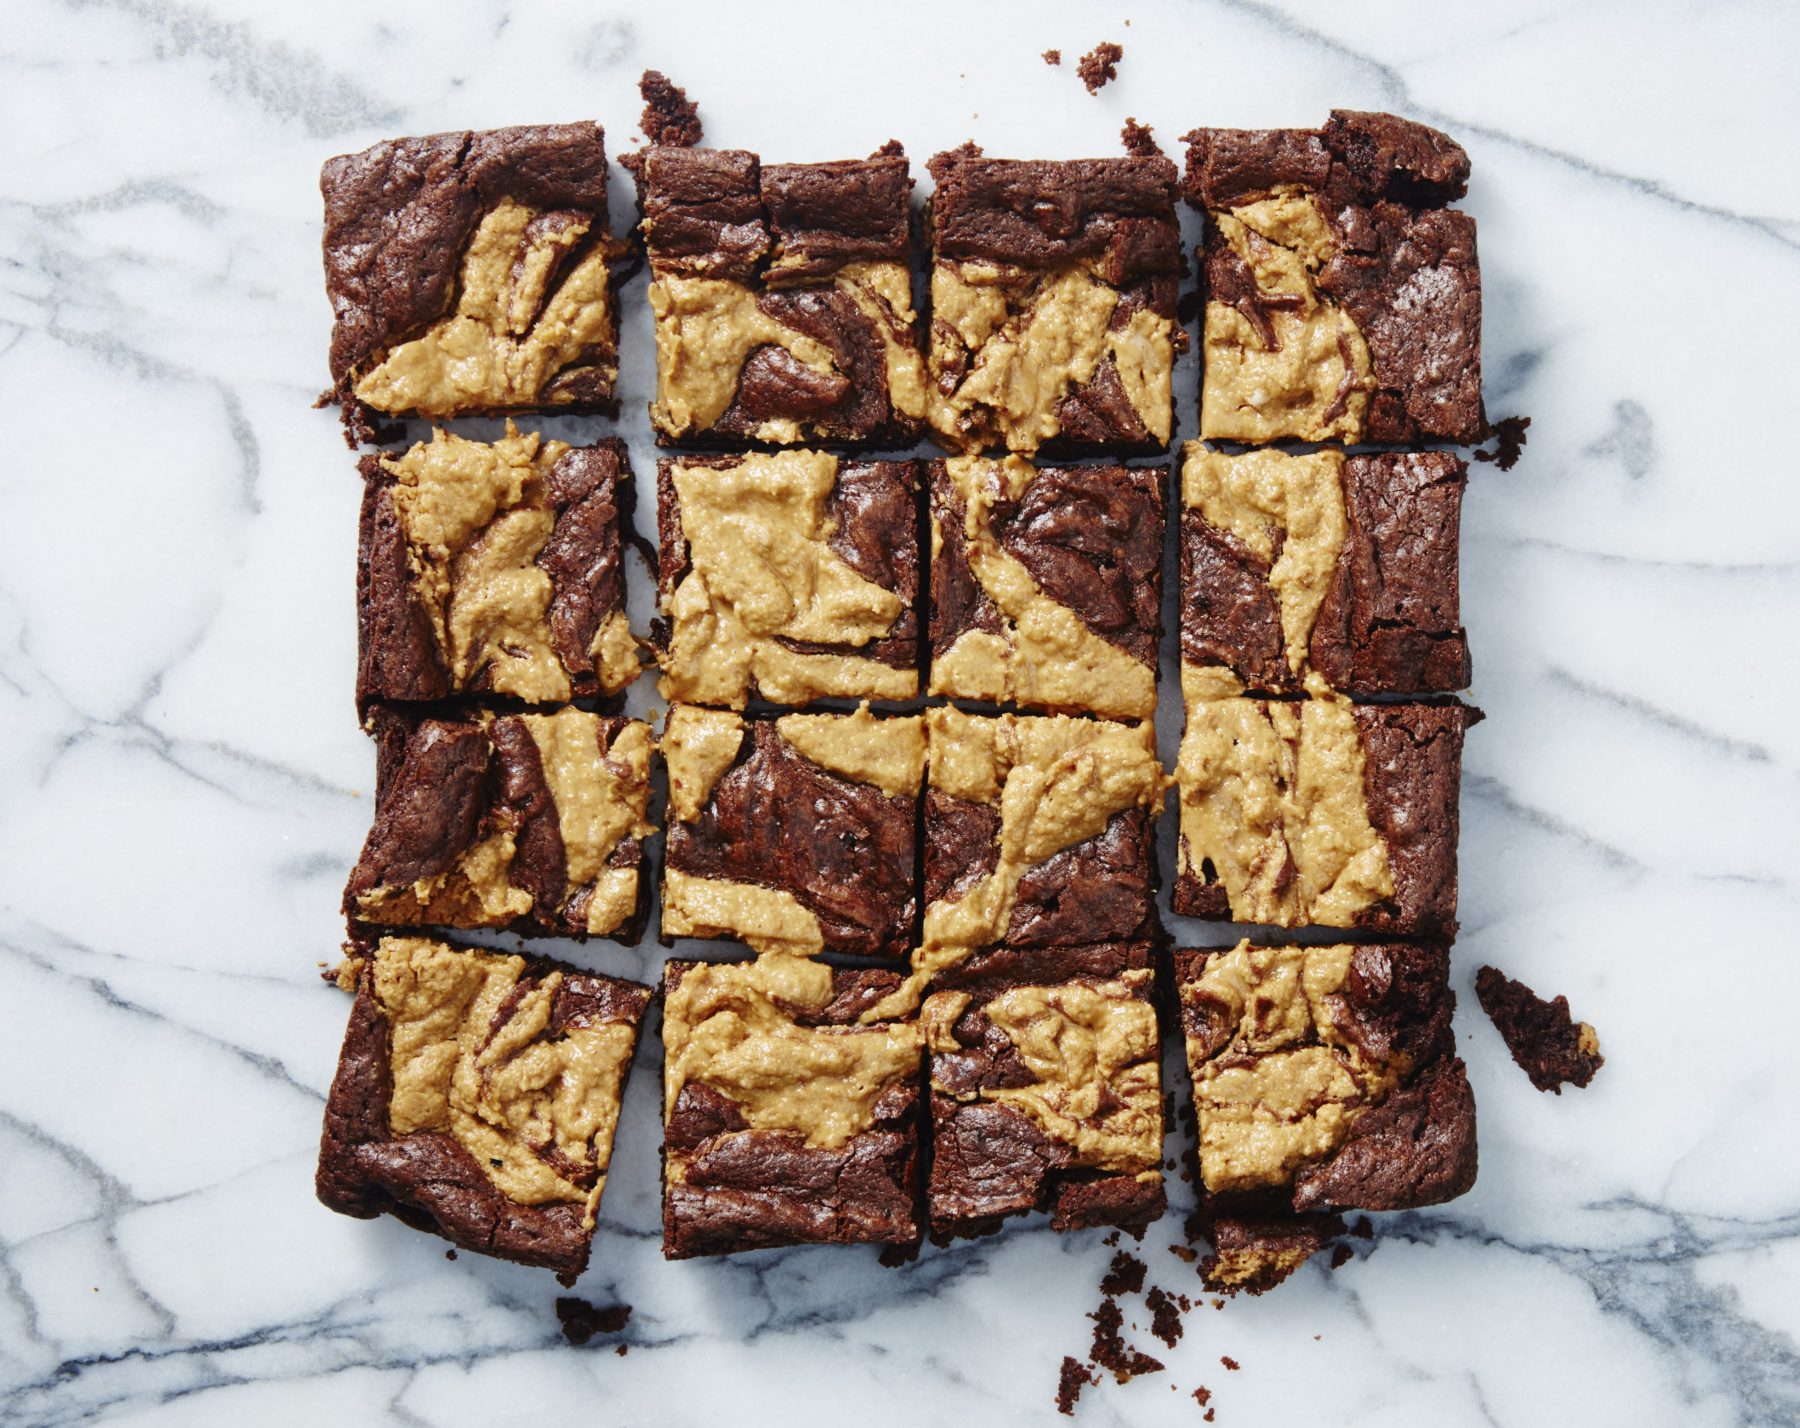 vegan peanut butter brownies recipe - learn how to make vegan desserts!